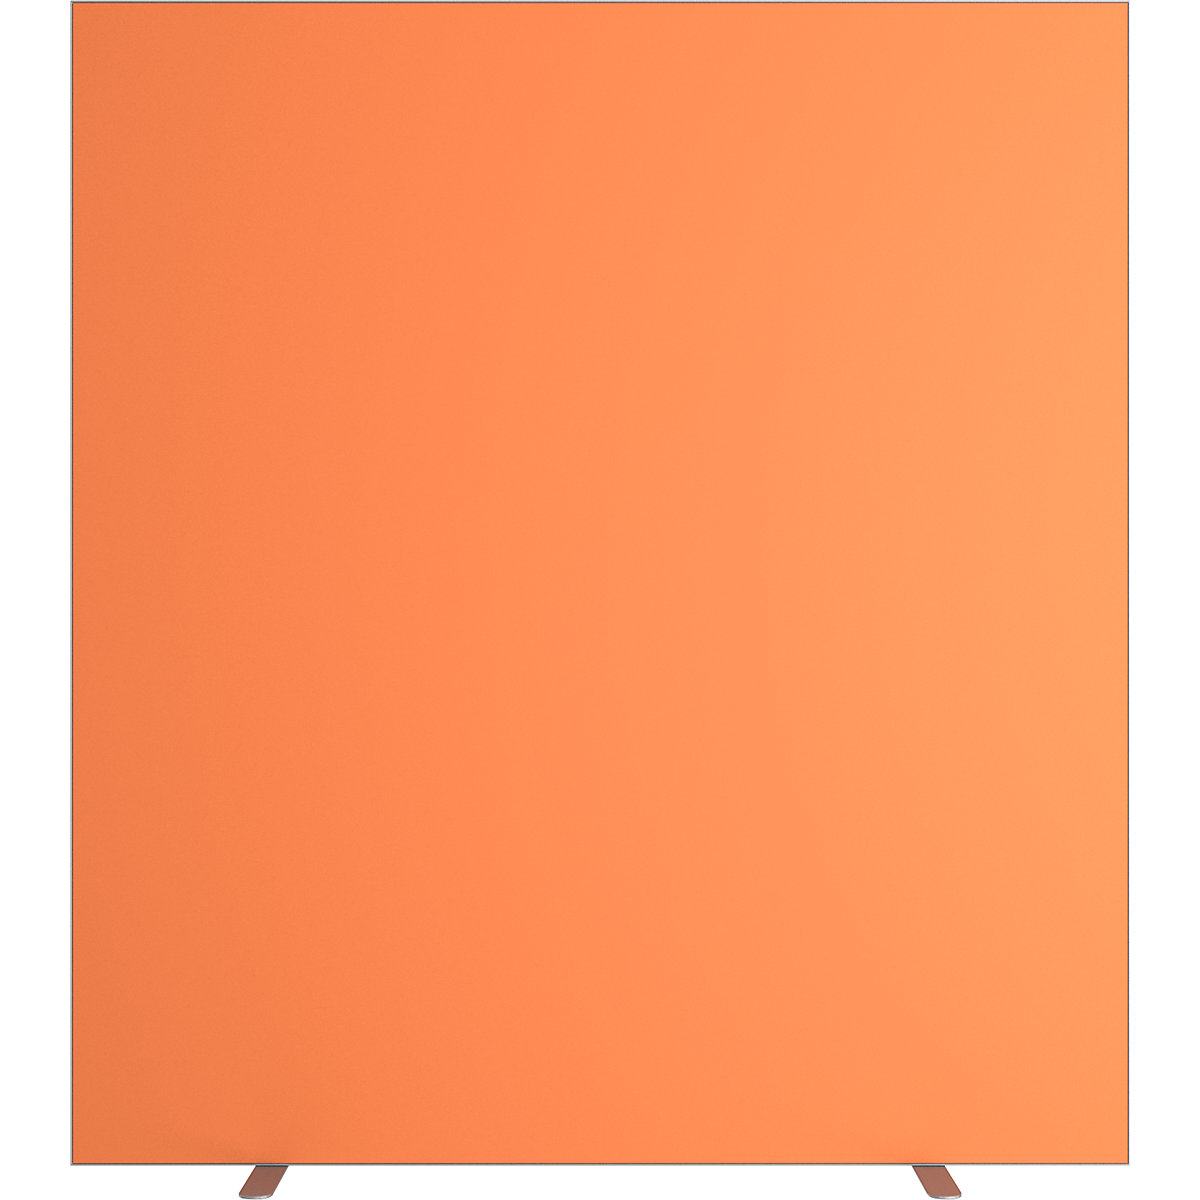 Trennwand easyScreen, einfarbig, orange, Breite 1600 mm-2